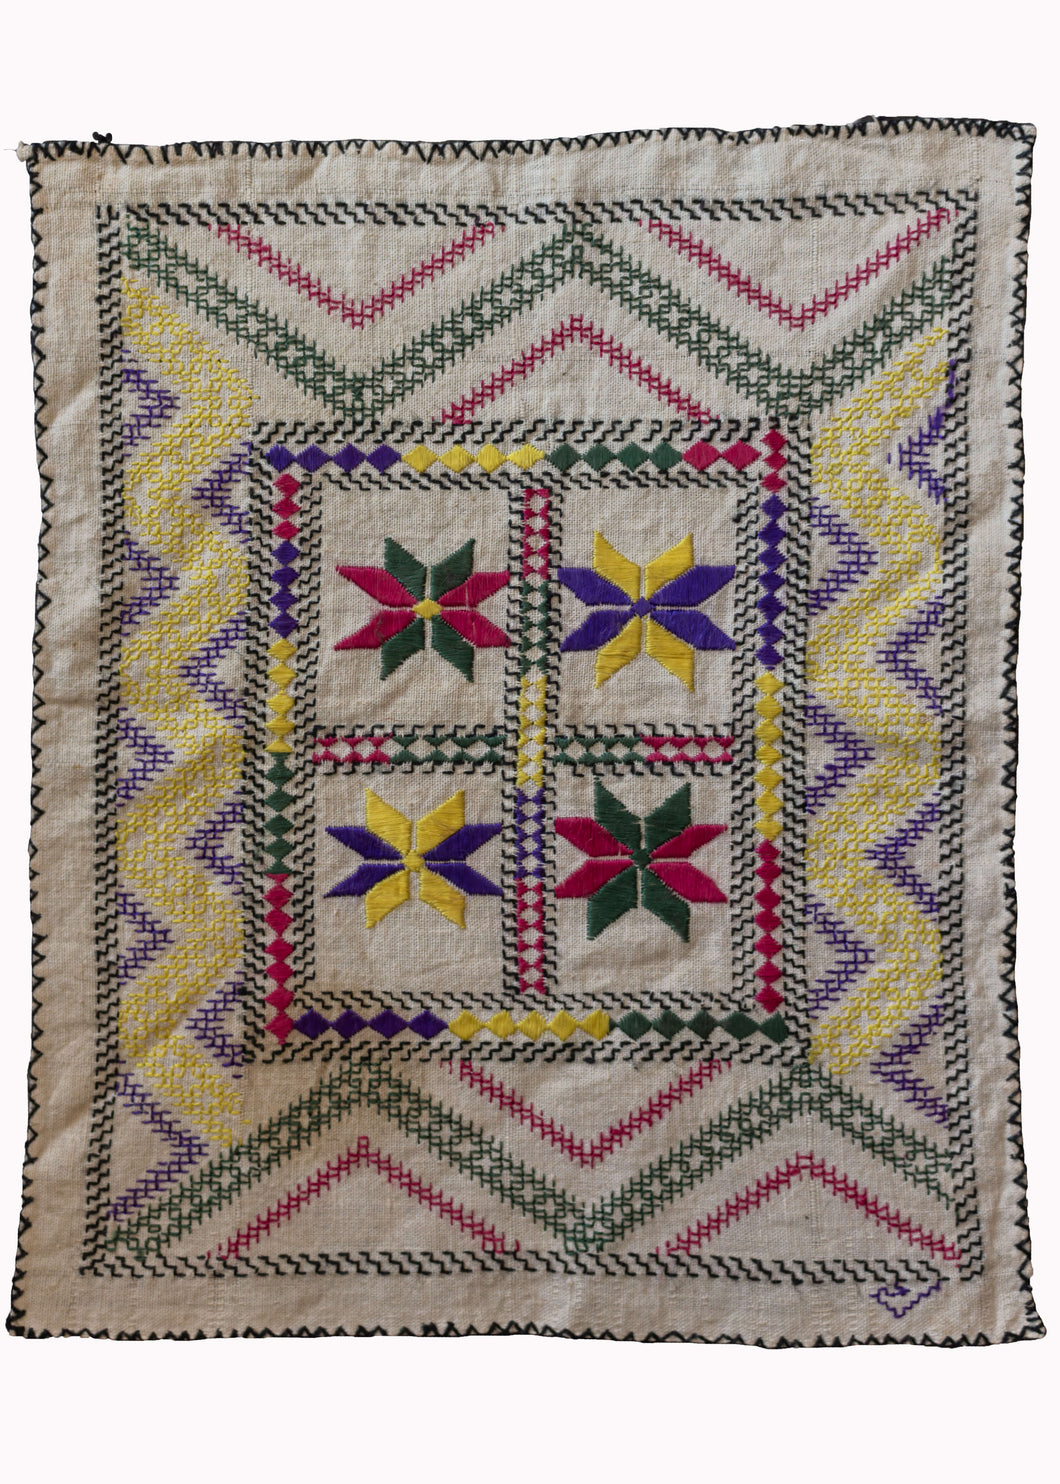 Vintage Hand Embroidered Hazara Prayer Cloth with yellow and purple stars